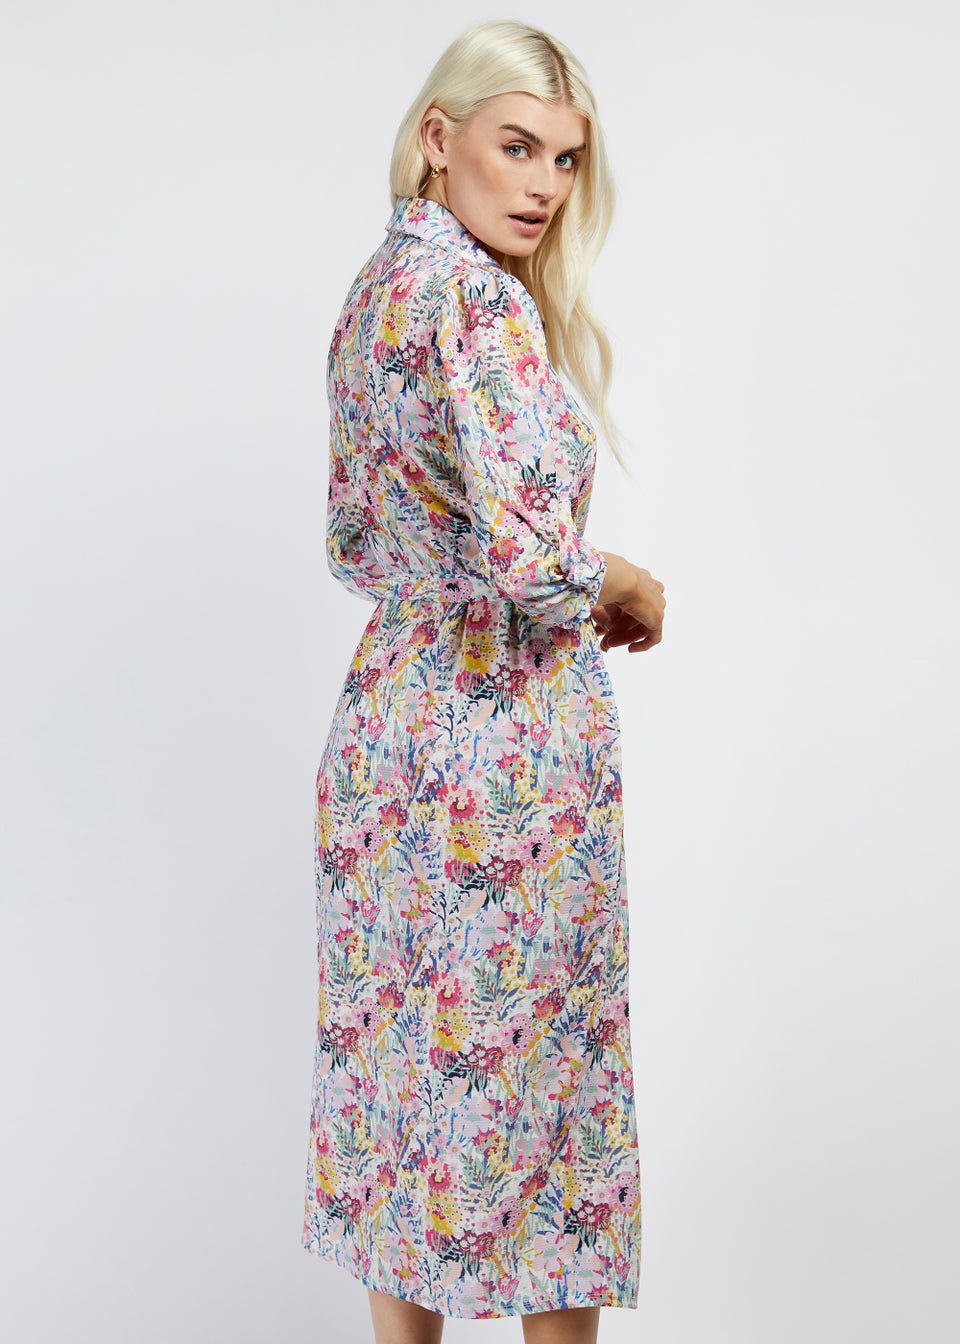 Girls on Film by Dani Dyer Multicoloured Floral Print Midi Shirt Dress